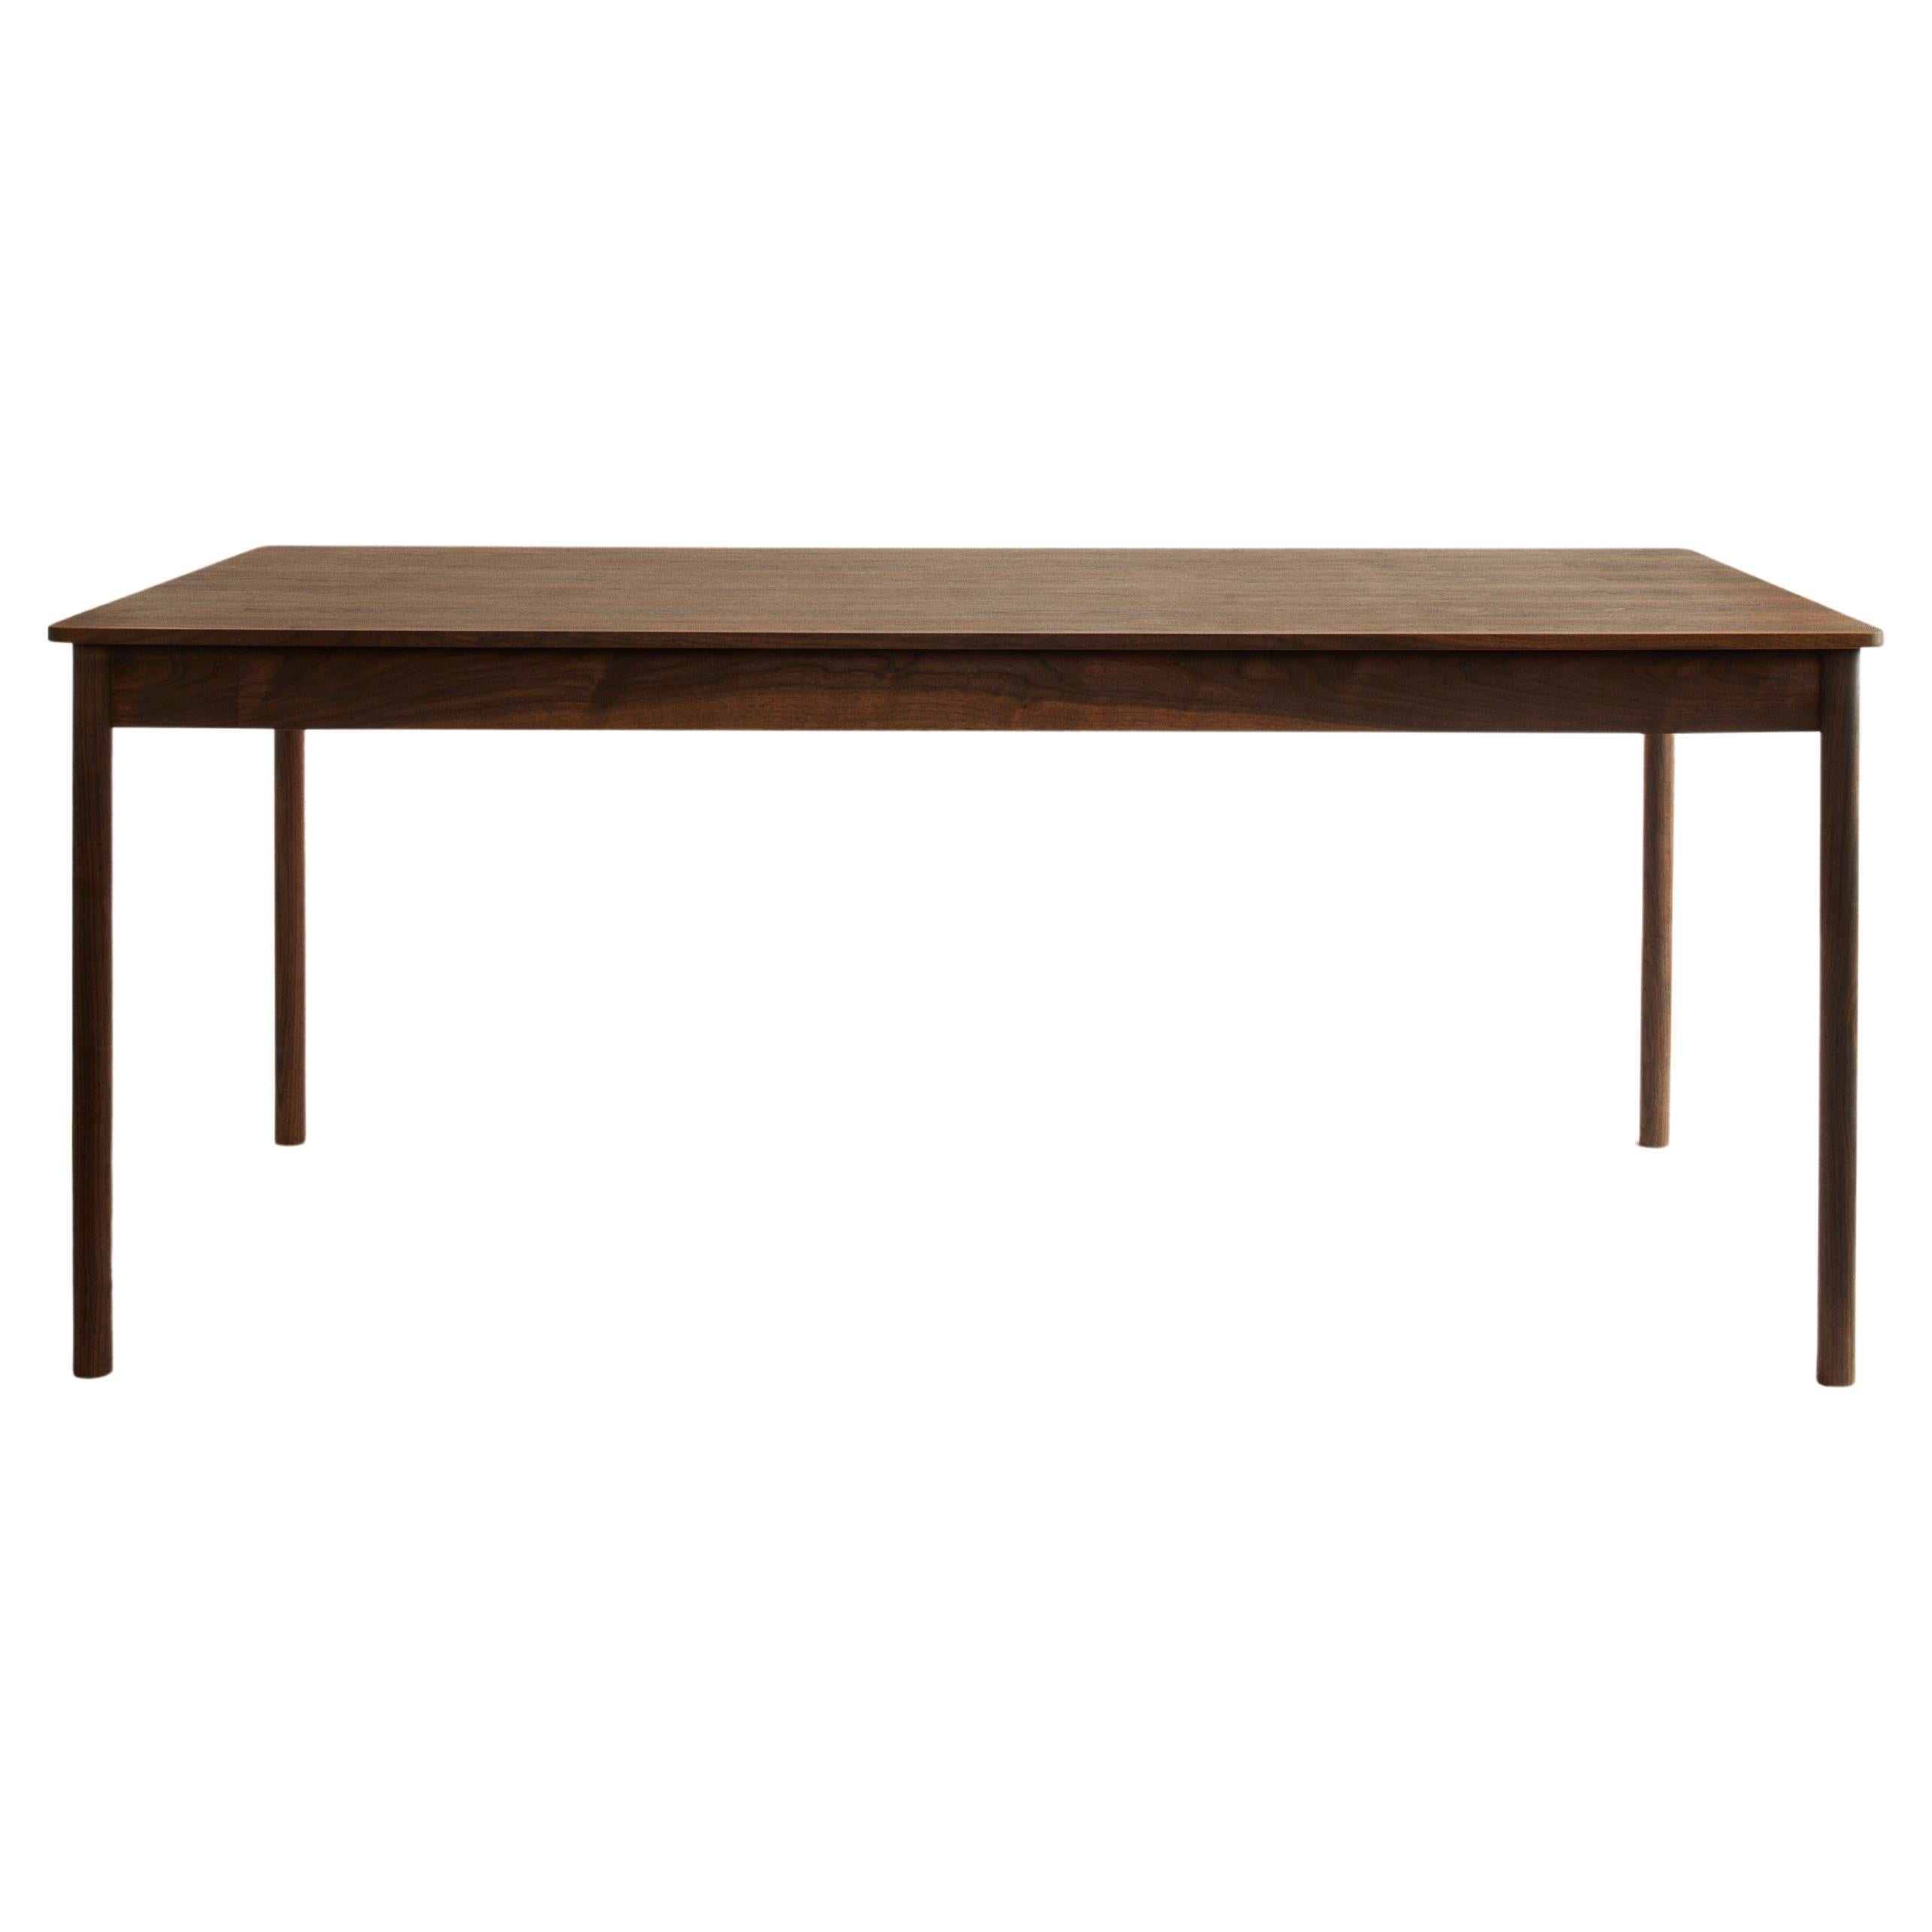 Sutton Table Handcrafted in Walnut or Oak Designed by Kevin Frankental for Lemon